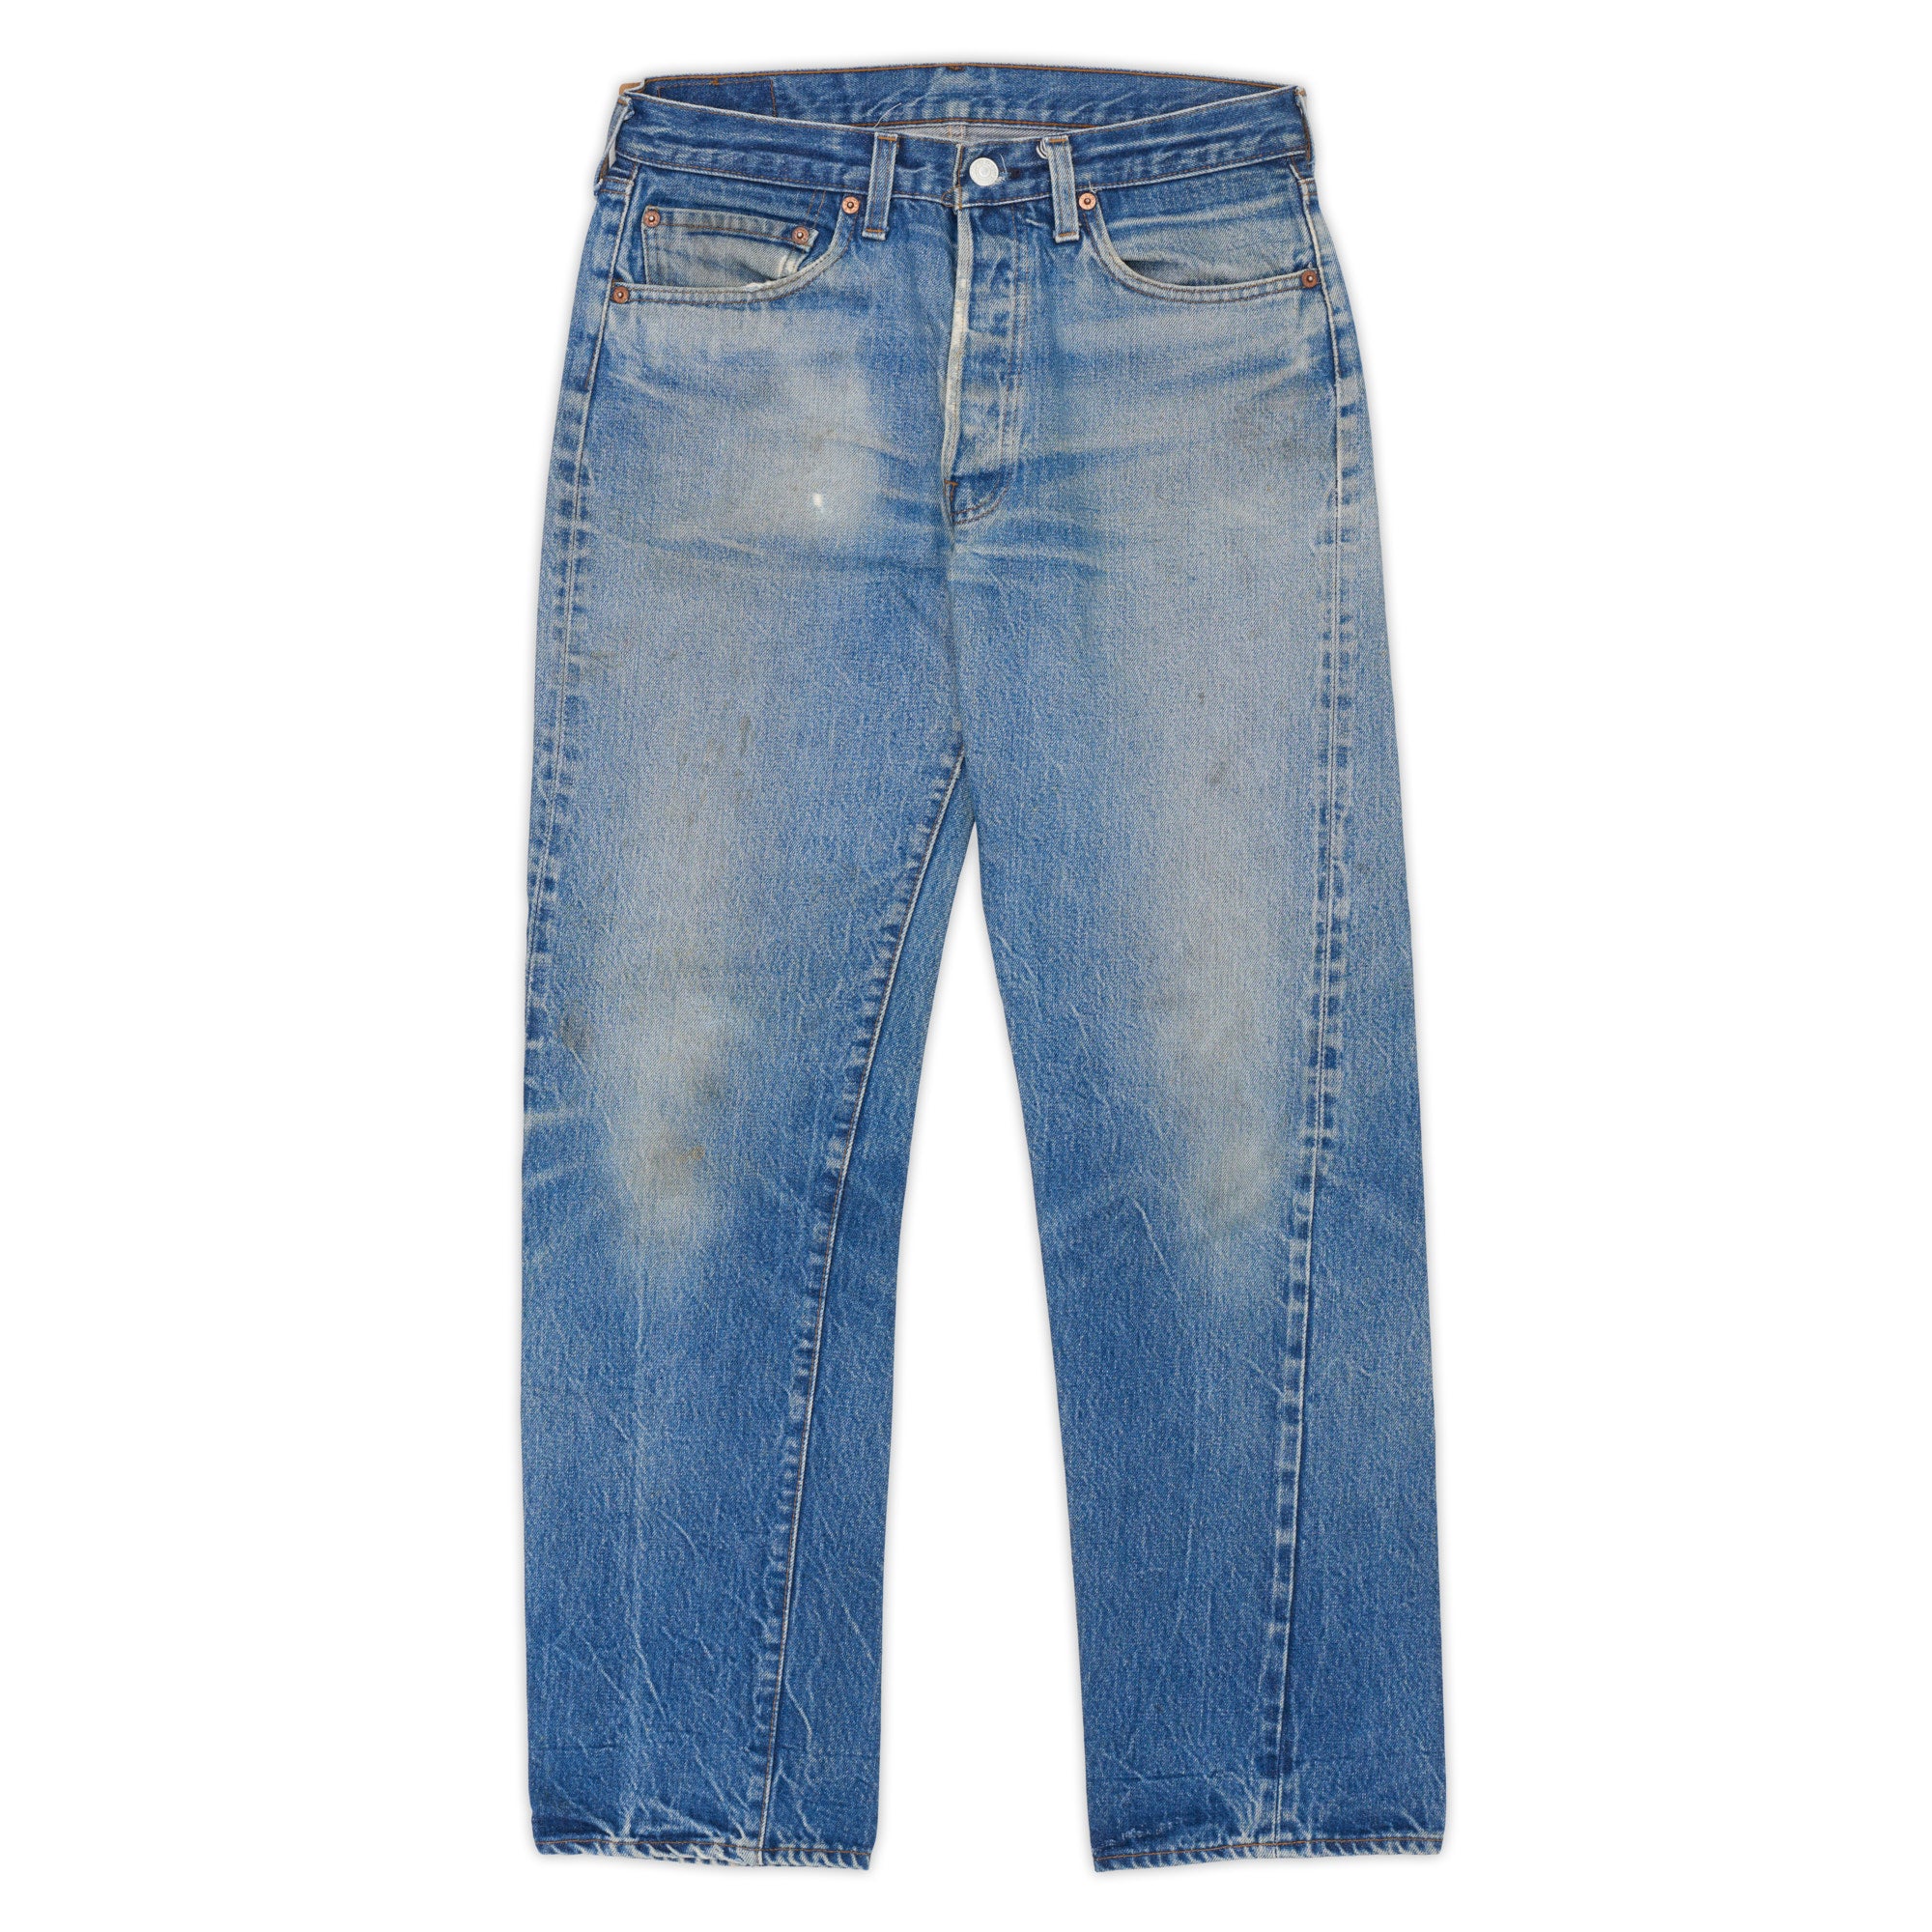 Vintage LEVI'S 501 USA Selvedge Slim Jeans Pants W33 L34 #524 Blue Tac